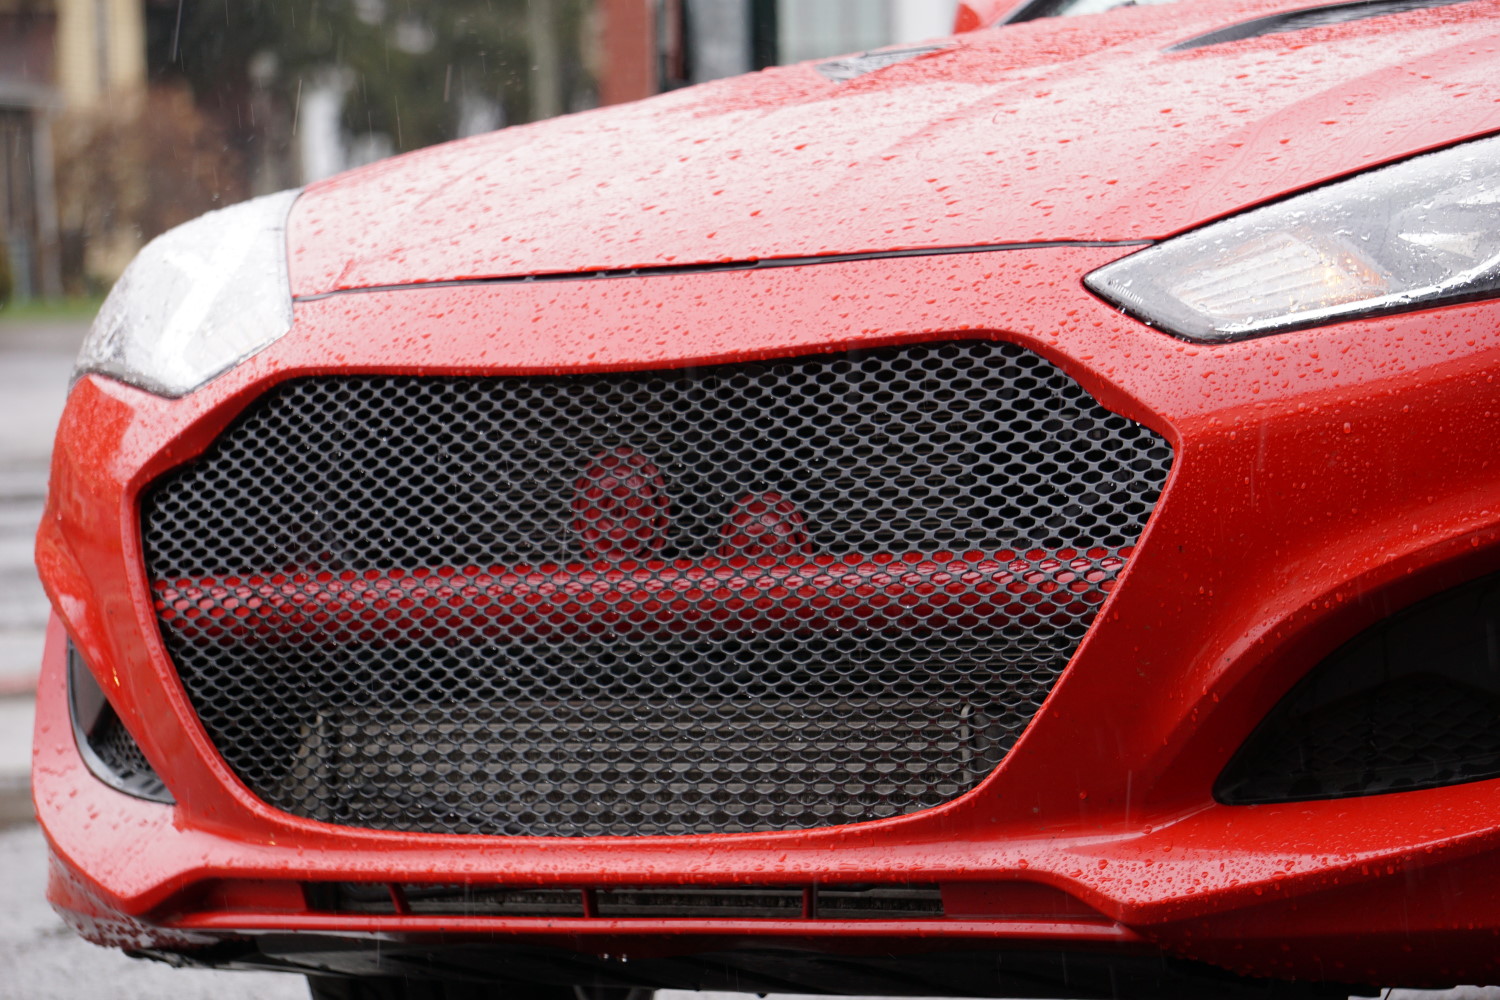 Rainy Day, Sleek Ride: Custom Grille and Crash Bar on Hyundai Genesis Coupe